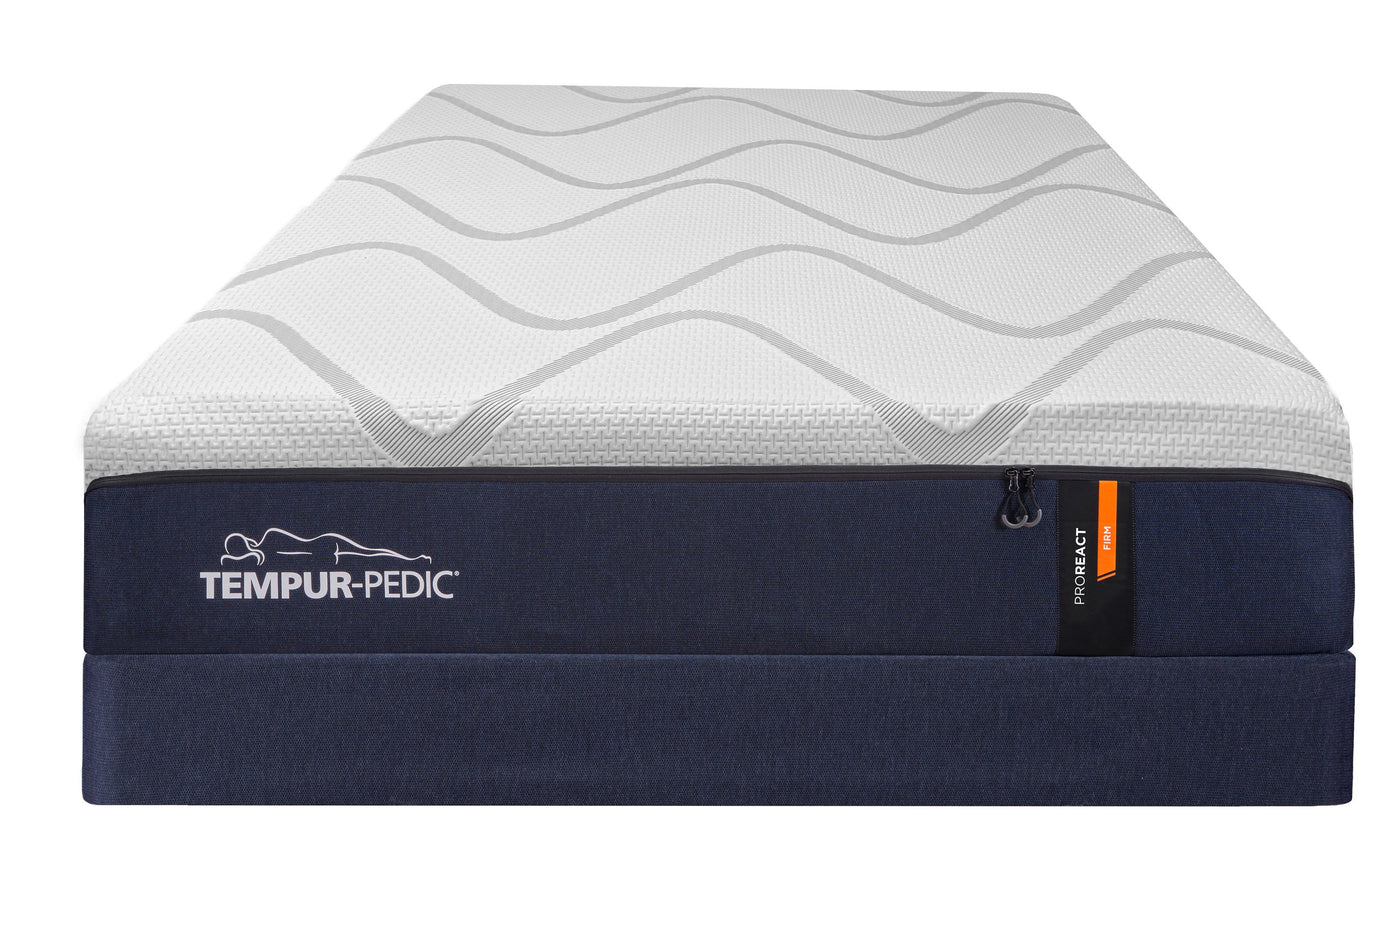 Tempur-Pedic Pro-React Firm Twin XL Mattress and Boxspring Set